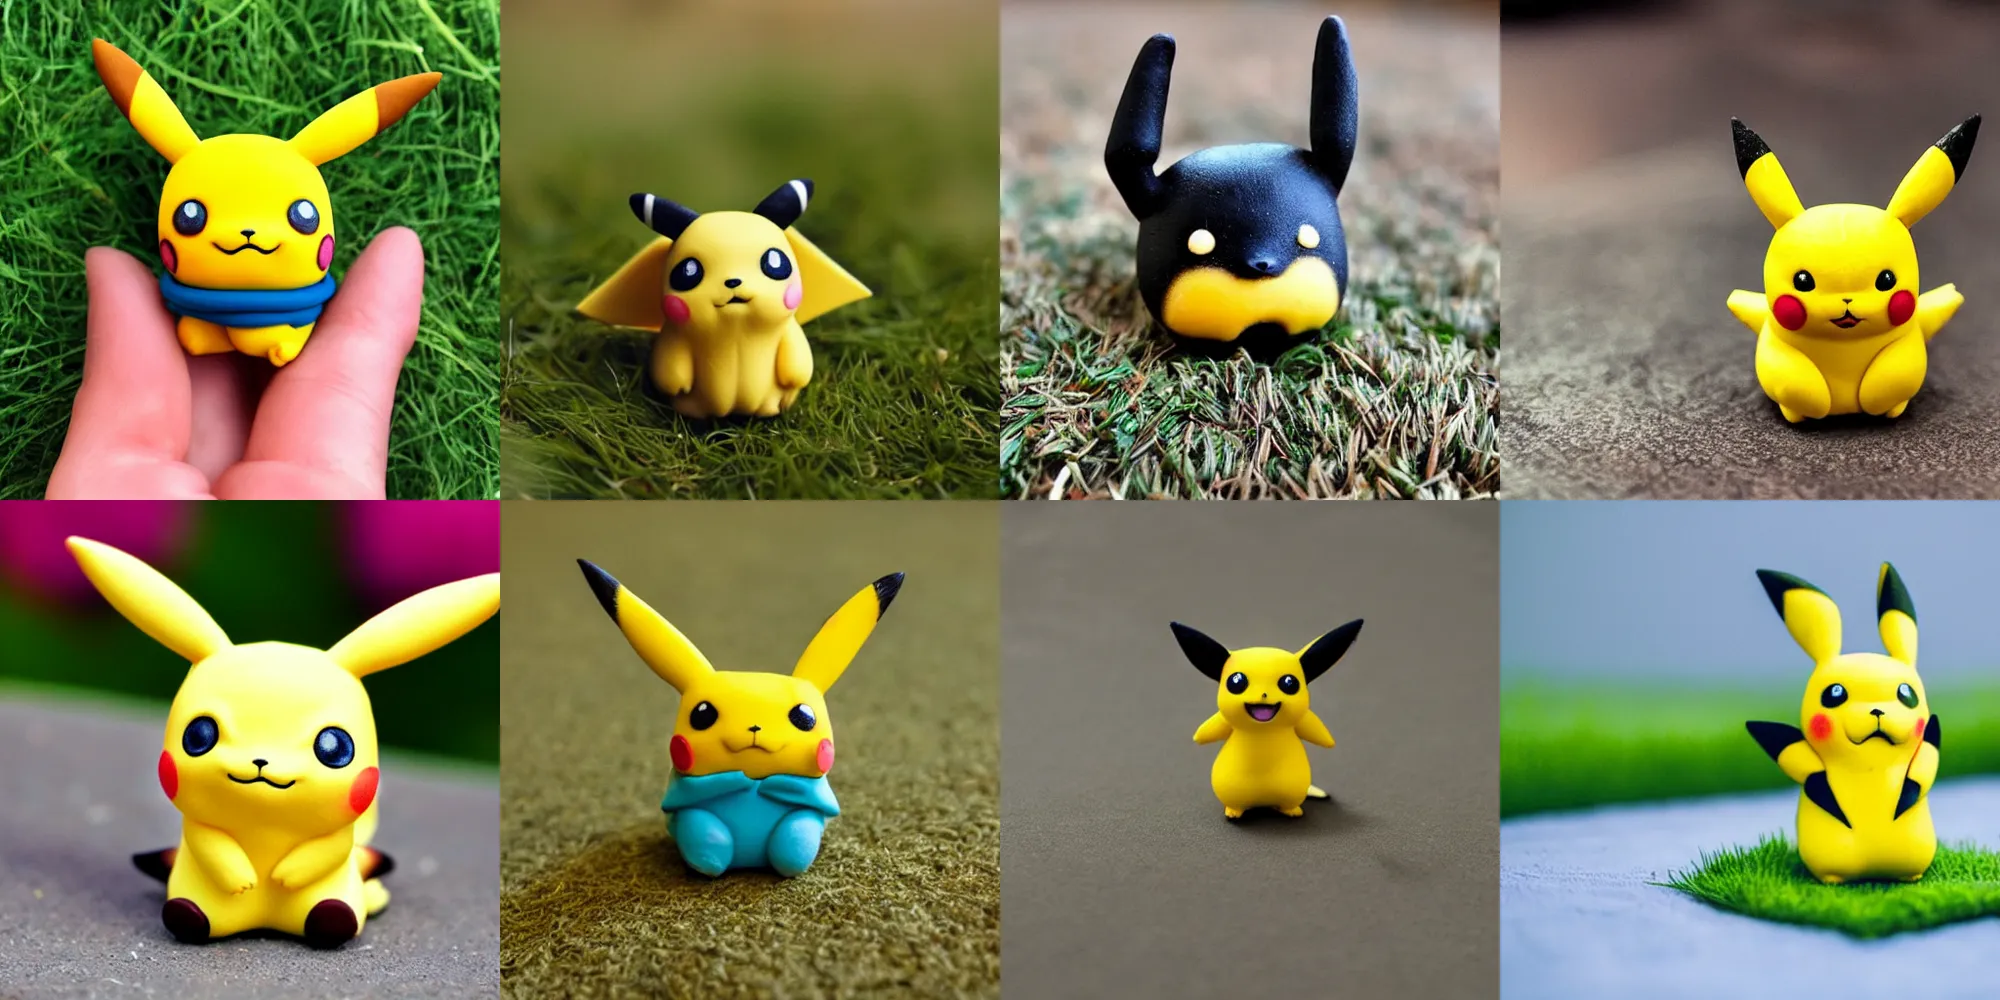 the cutest little pikachu figurine made of polymer